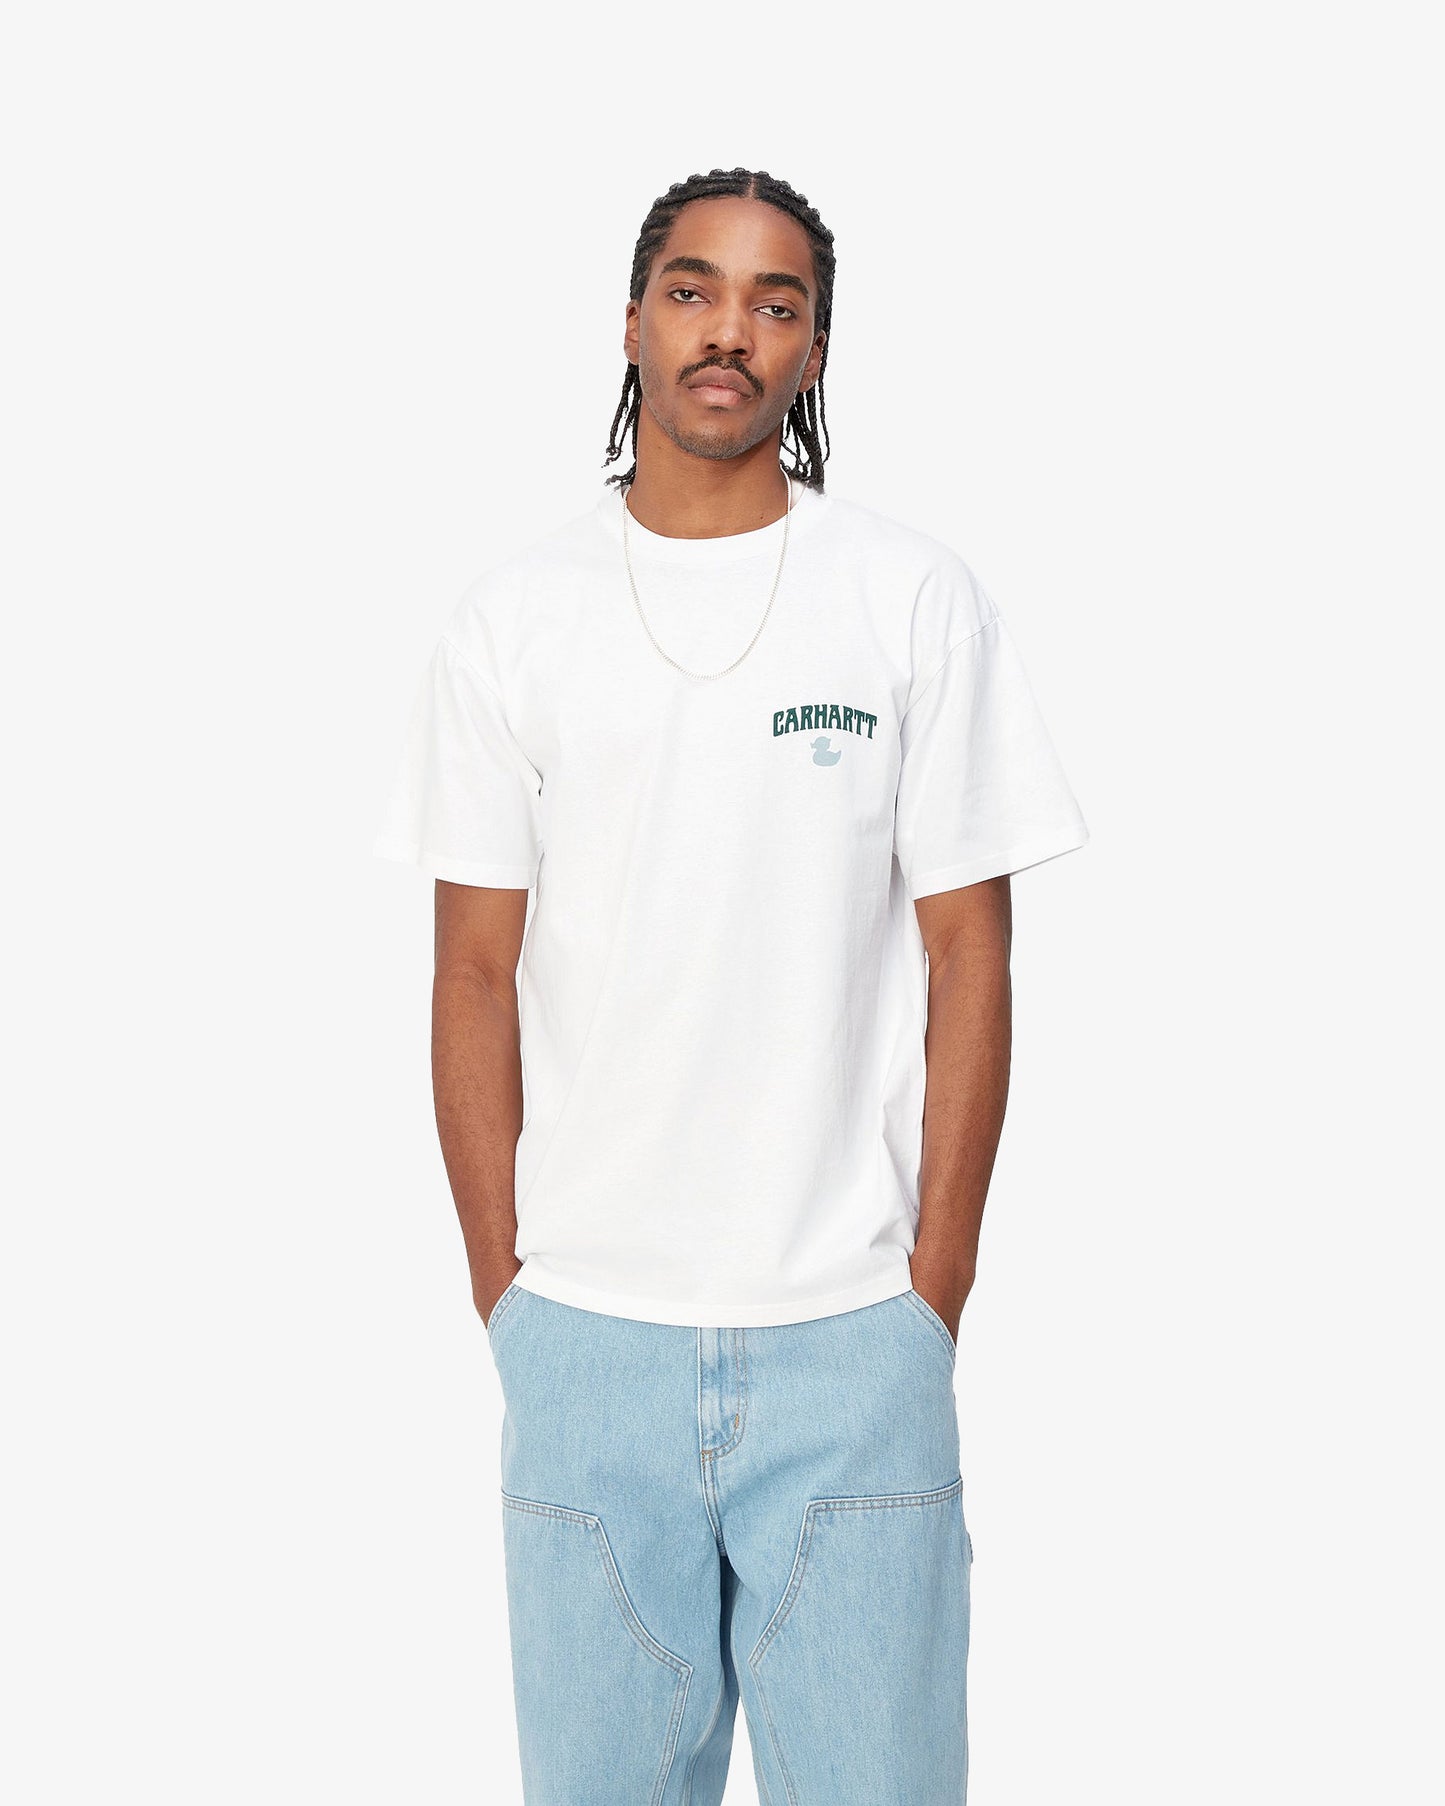 Carhartt WIP S/S Duckin T-Shirt